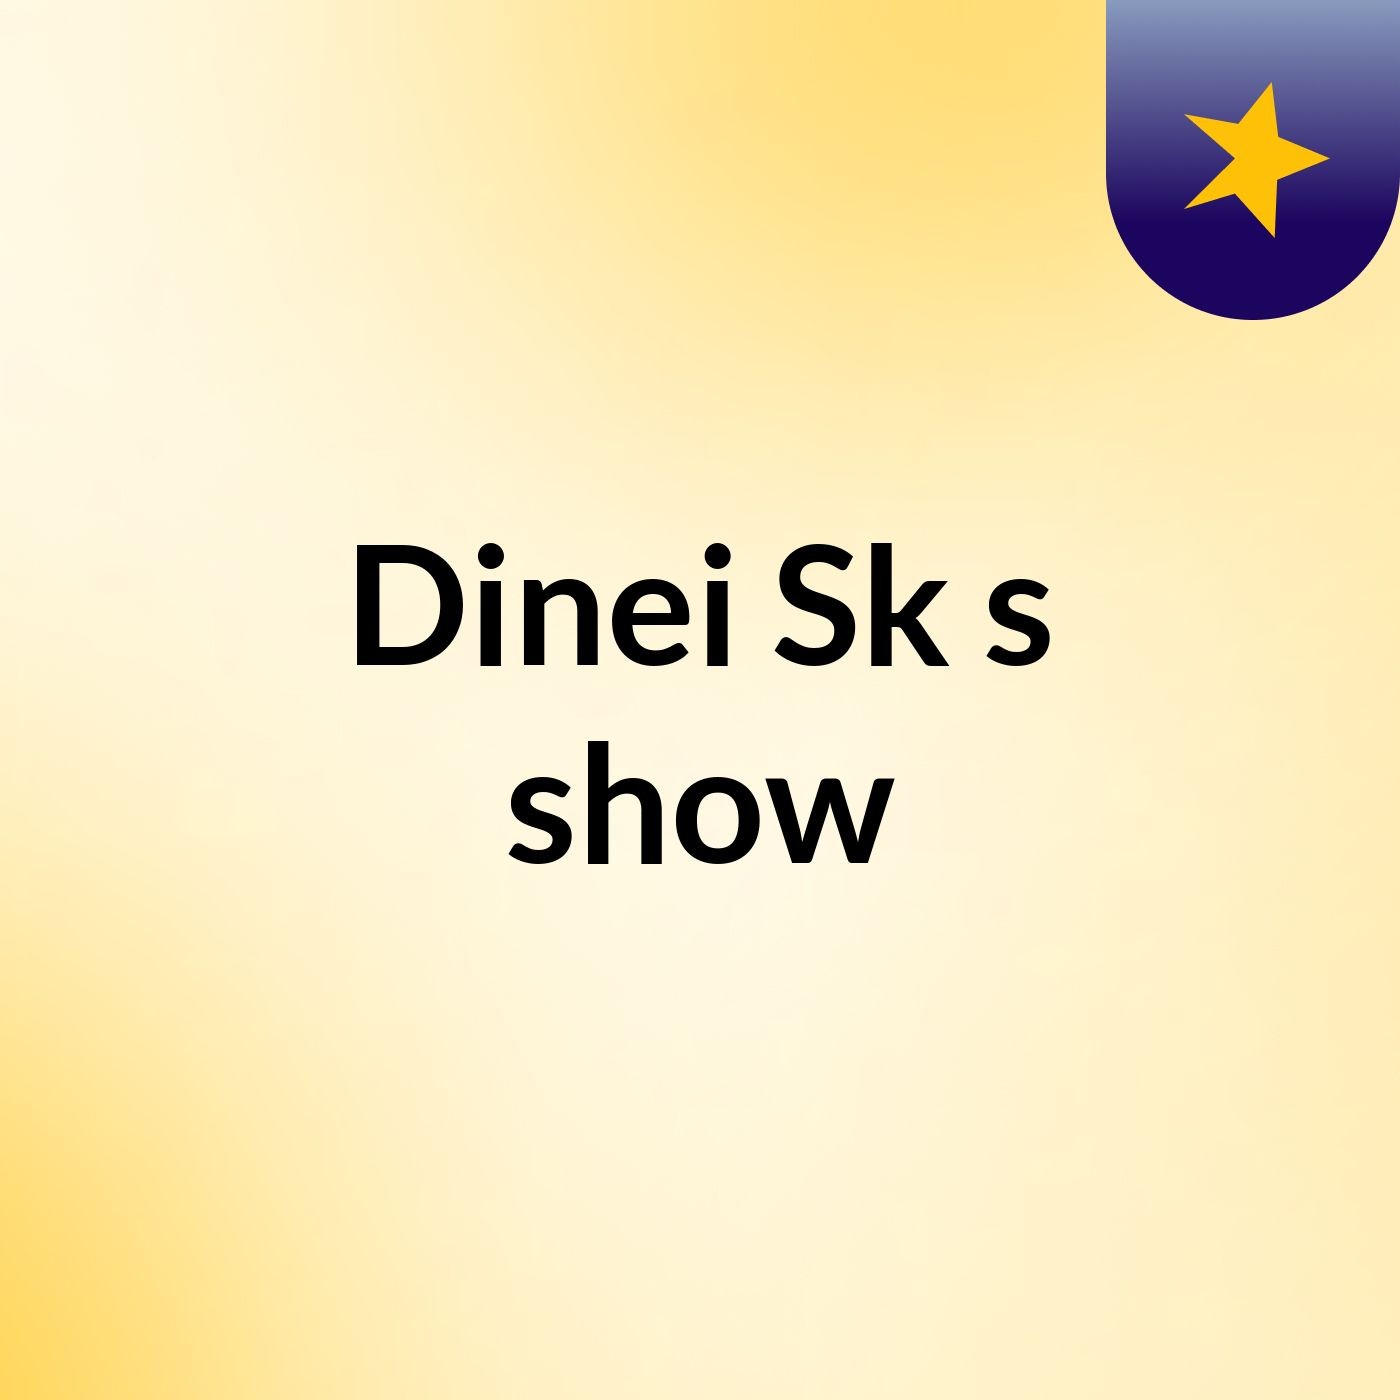 Dinei Sk's show